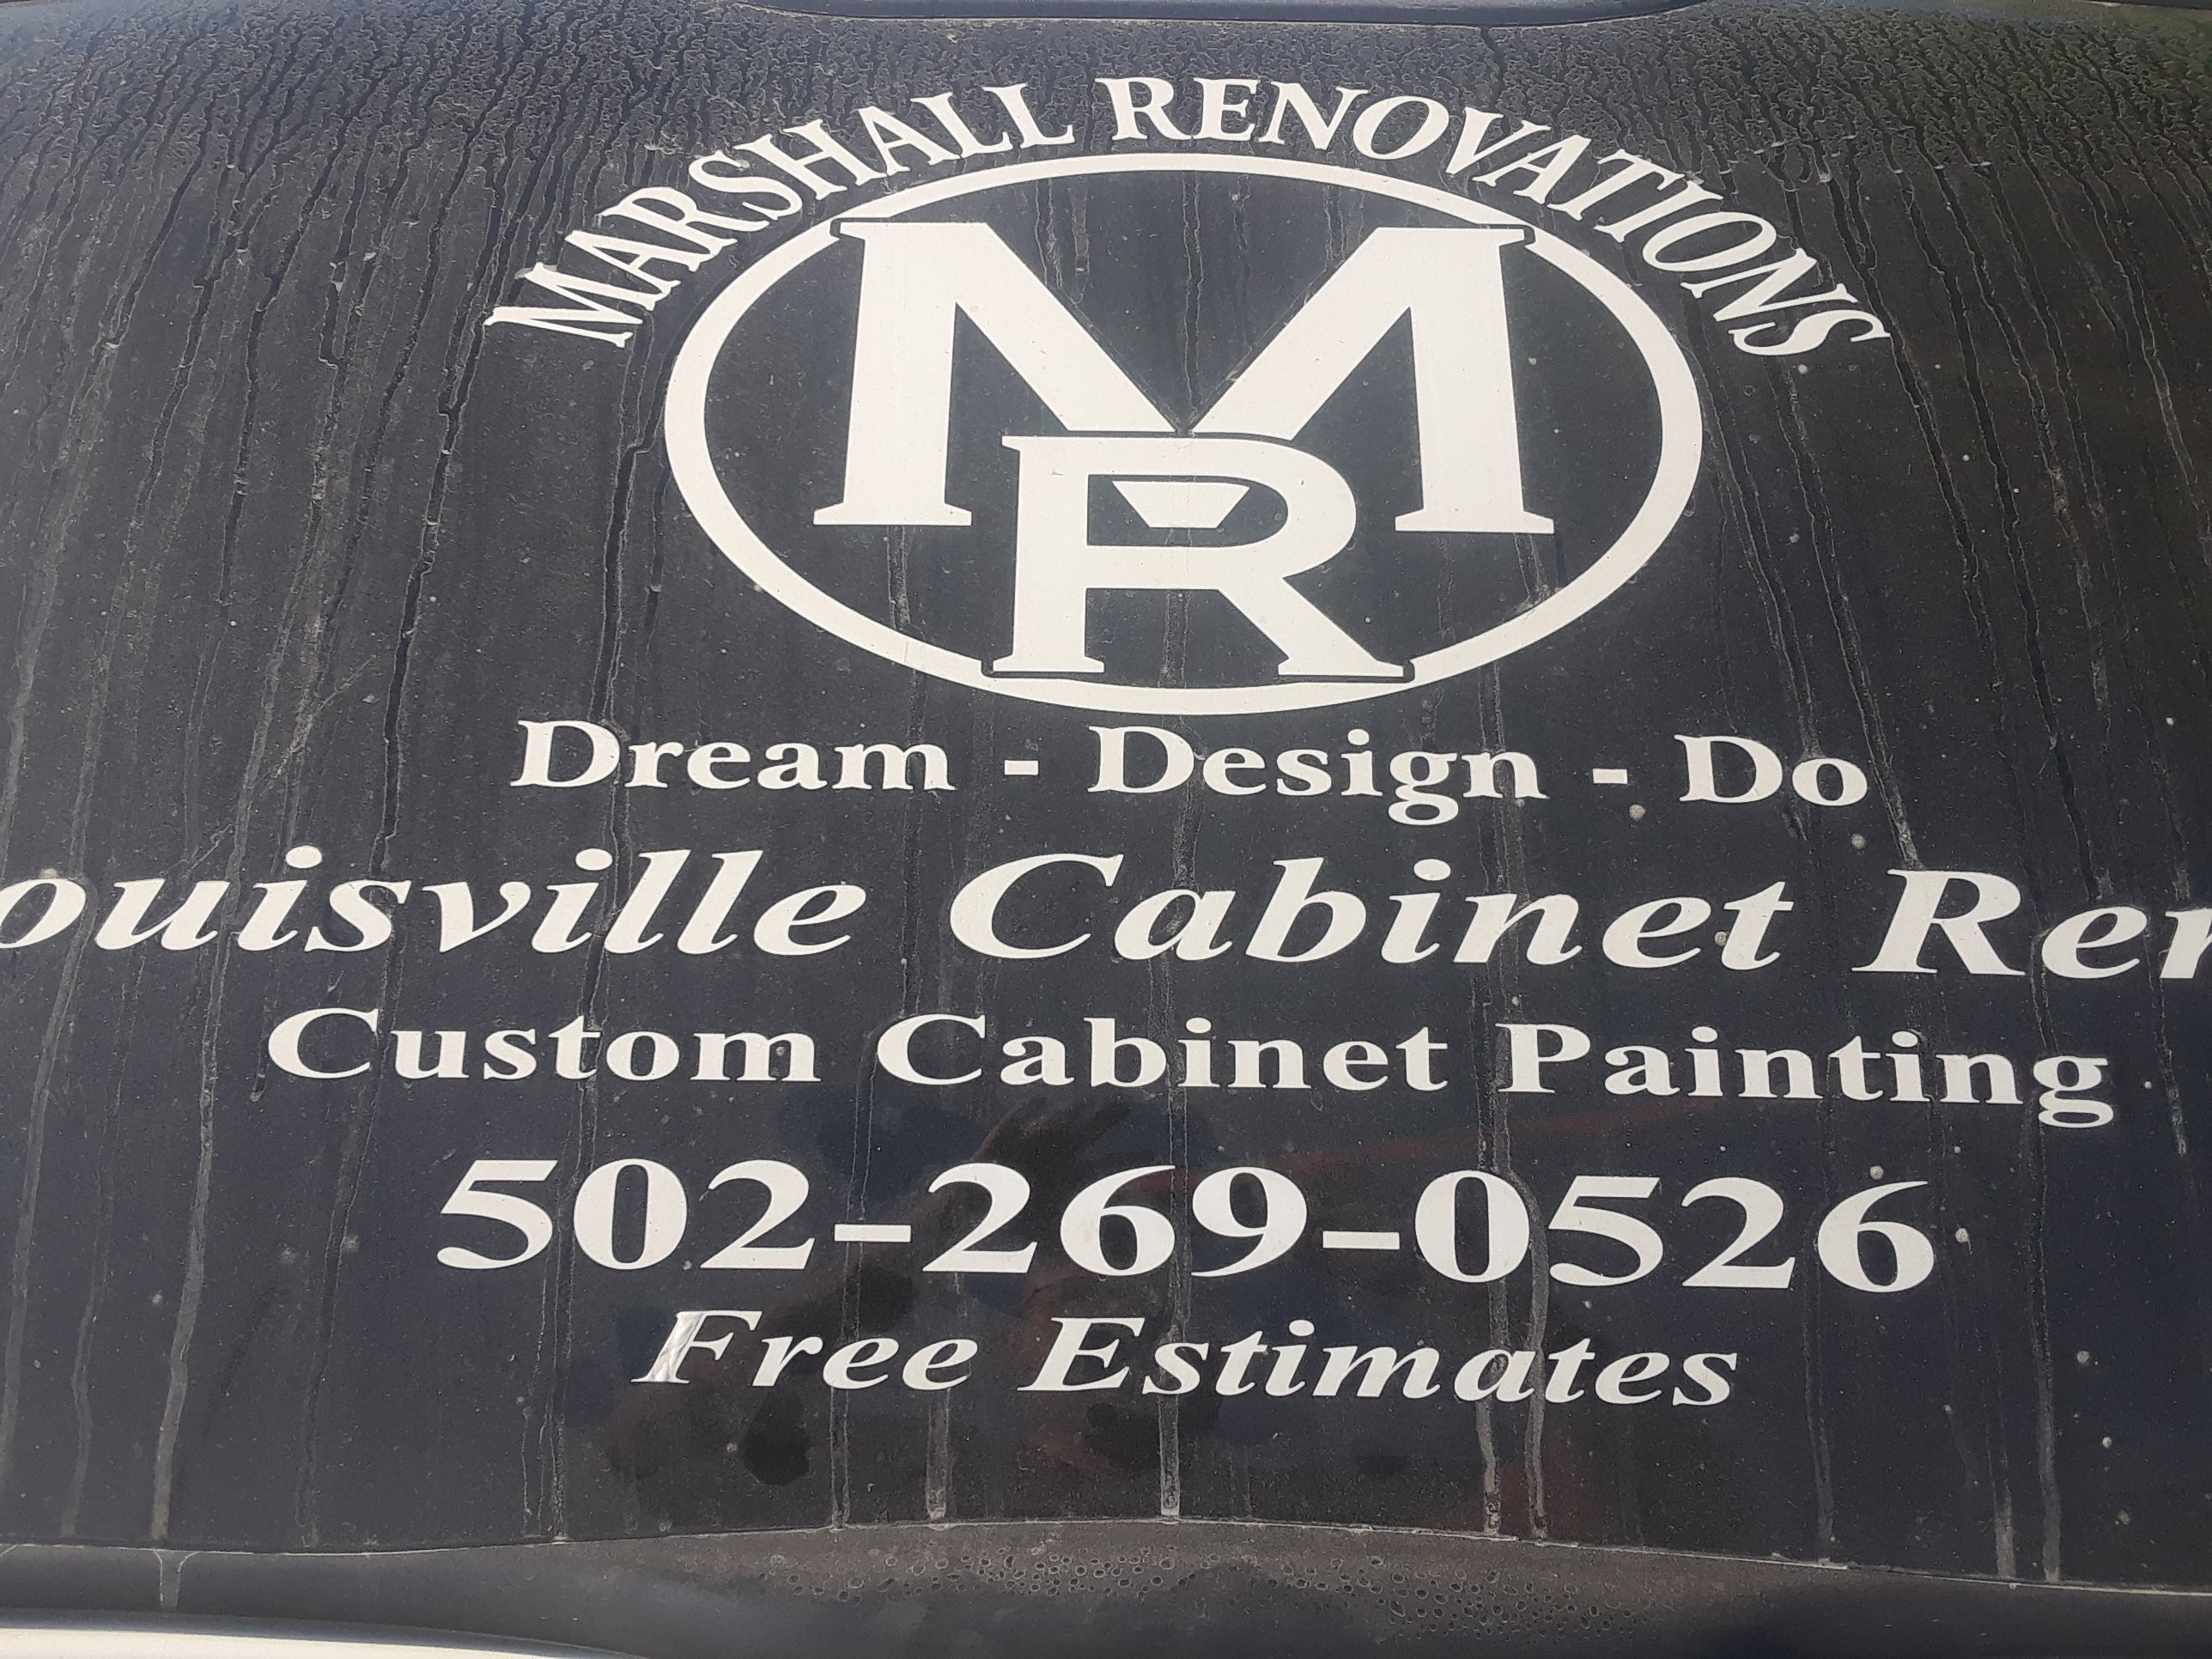 Marshall Renovations Logo